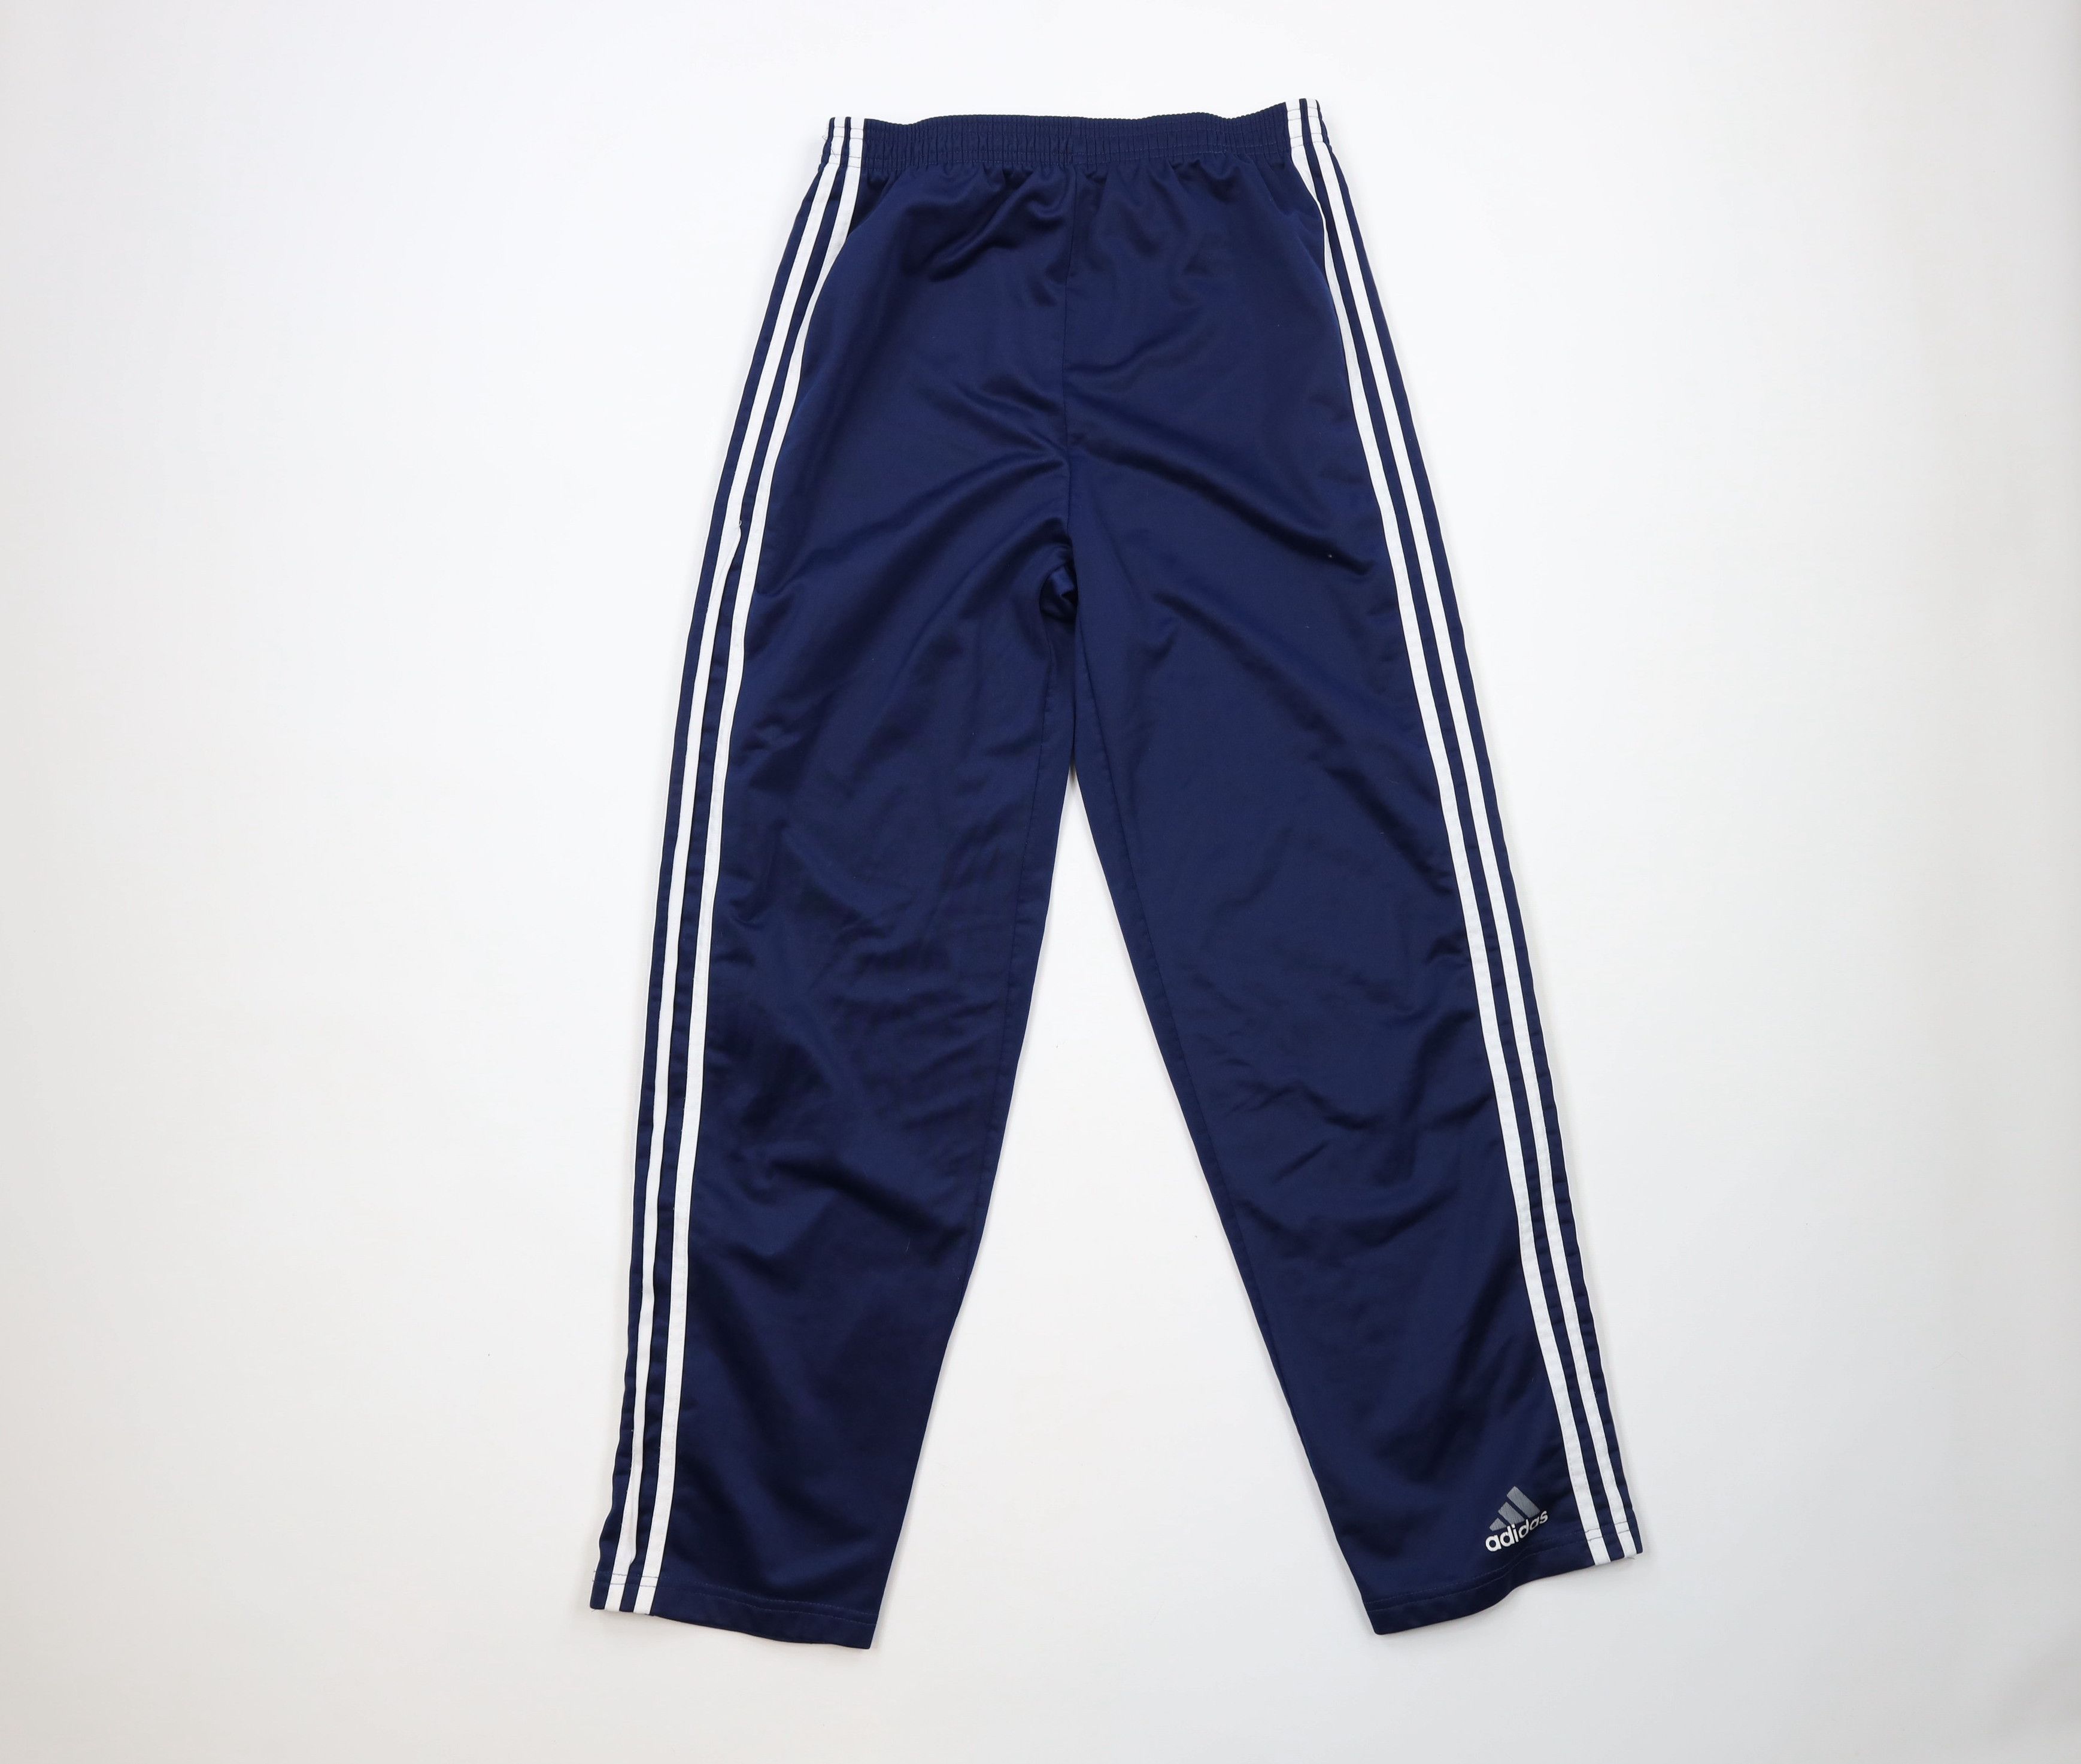 Adidas Vintage 90s Adidas Striped Tearaway Sweatpants Pants Blue Size US 34 / EU 50 - 1 Preview